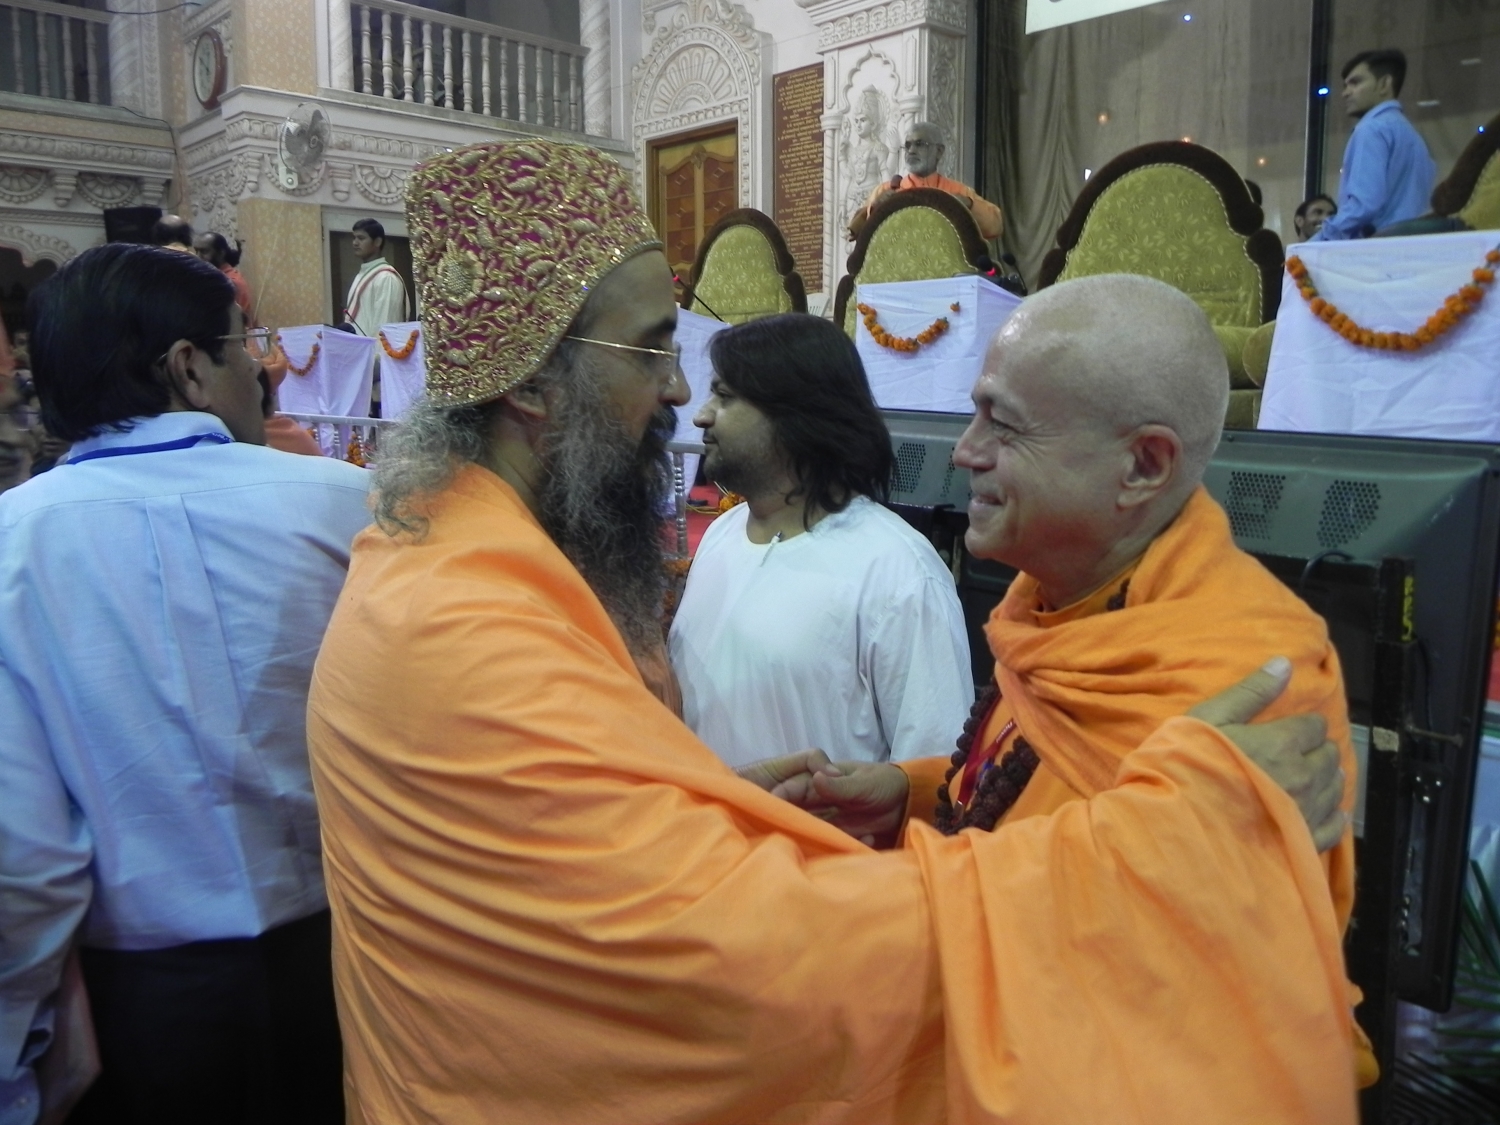 Hindu Dharma Acharya Sabha 5th Convention - India, Ahmedabad - 2012, November